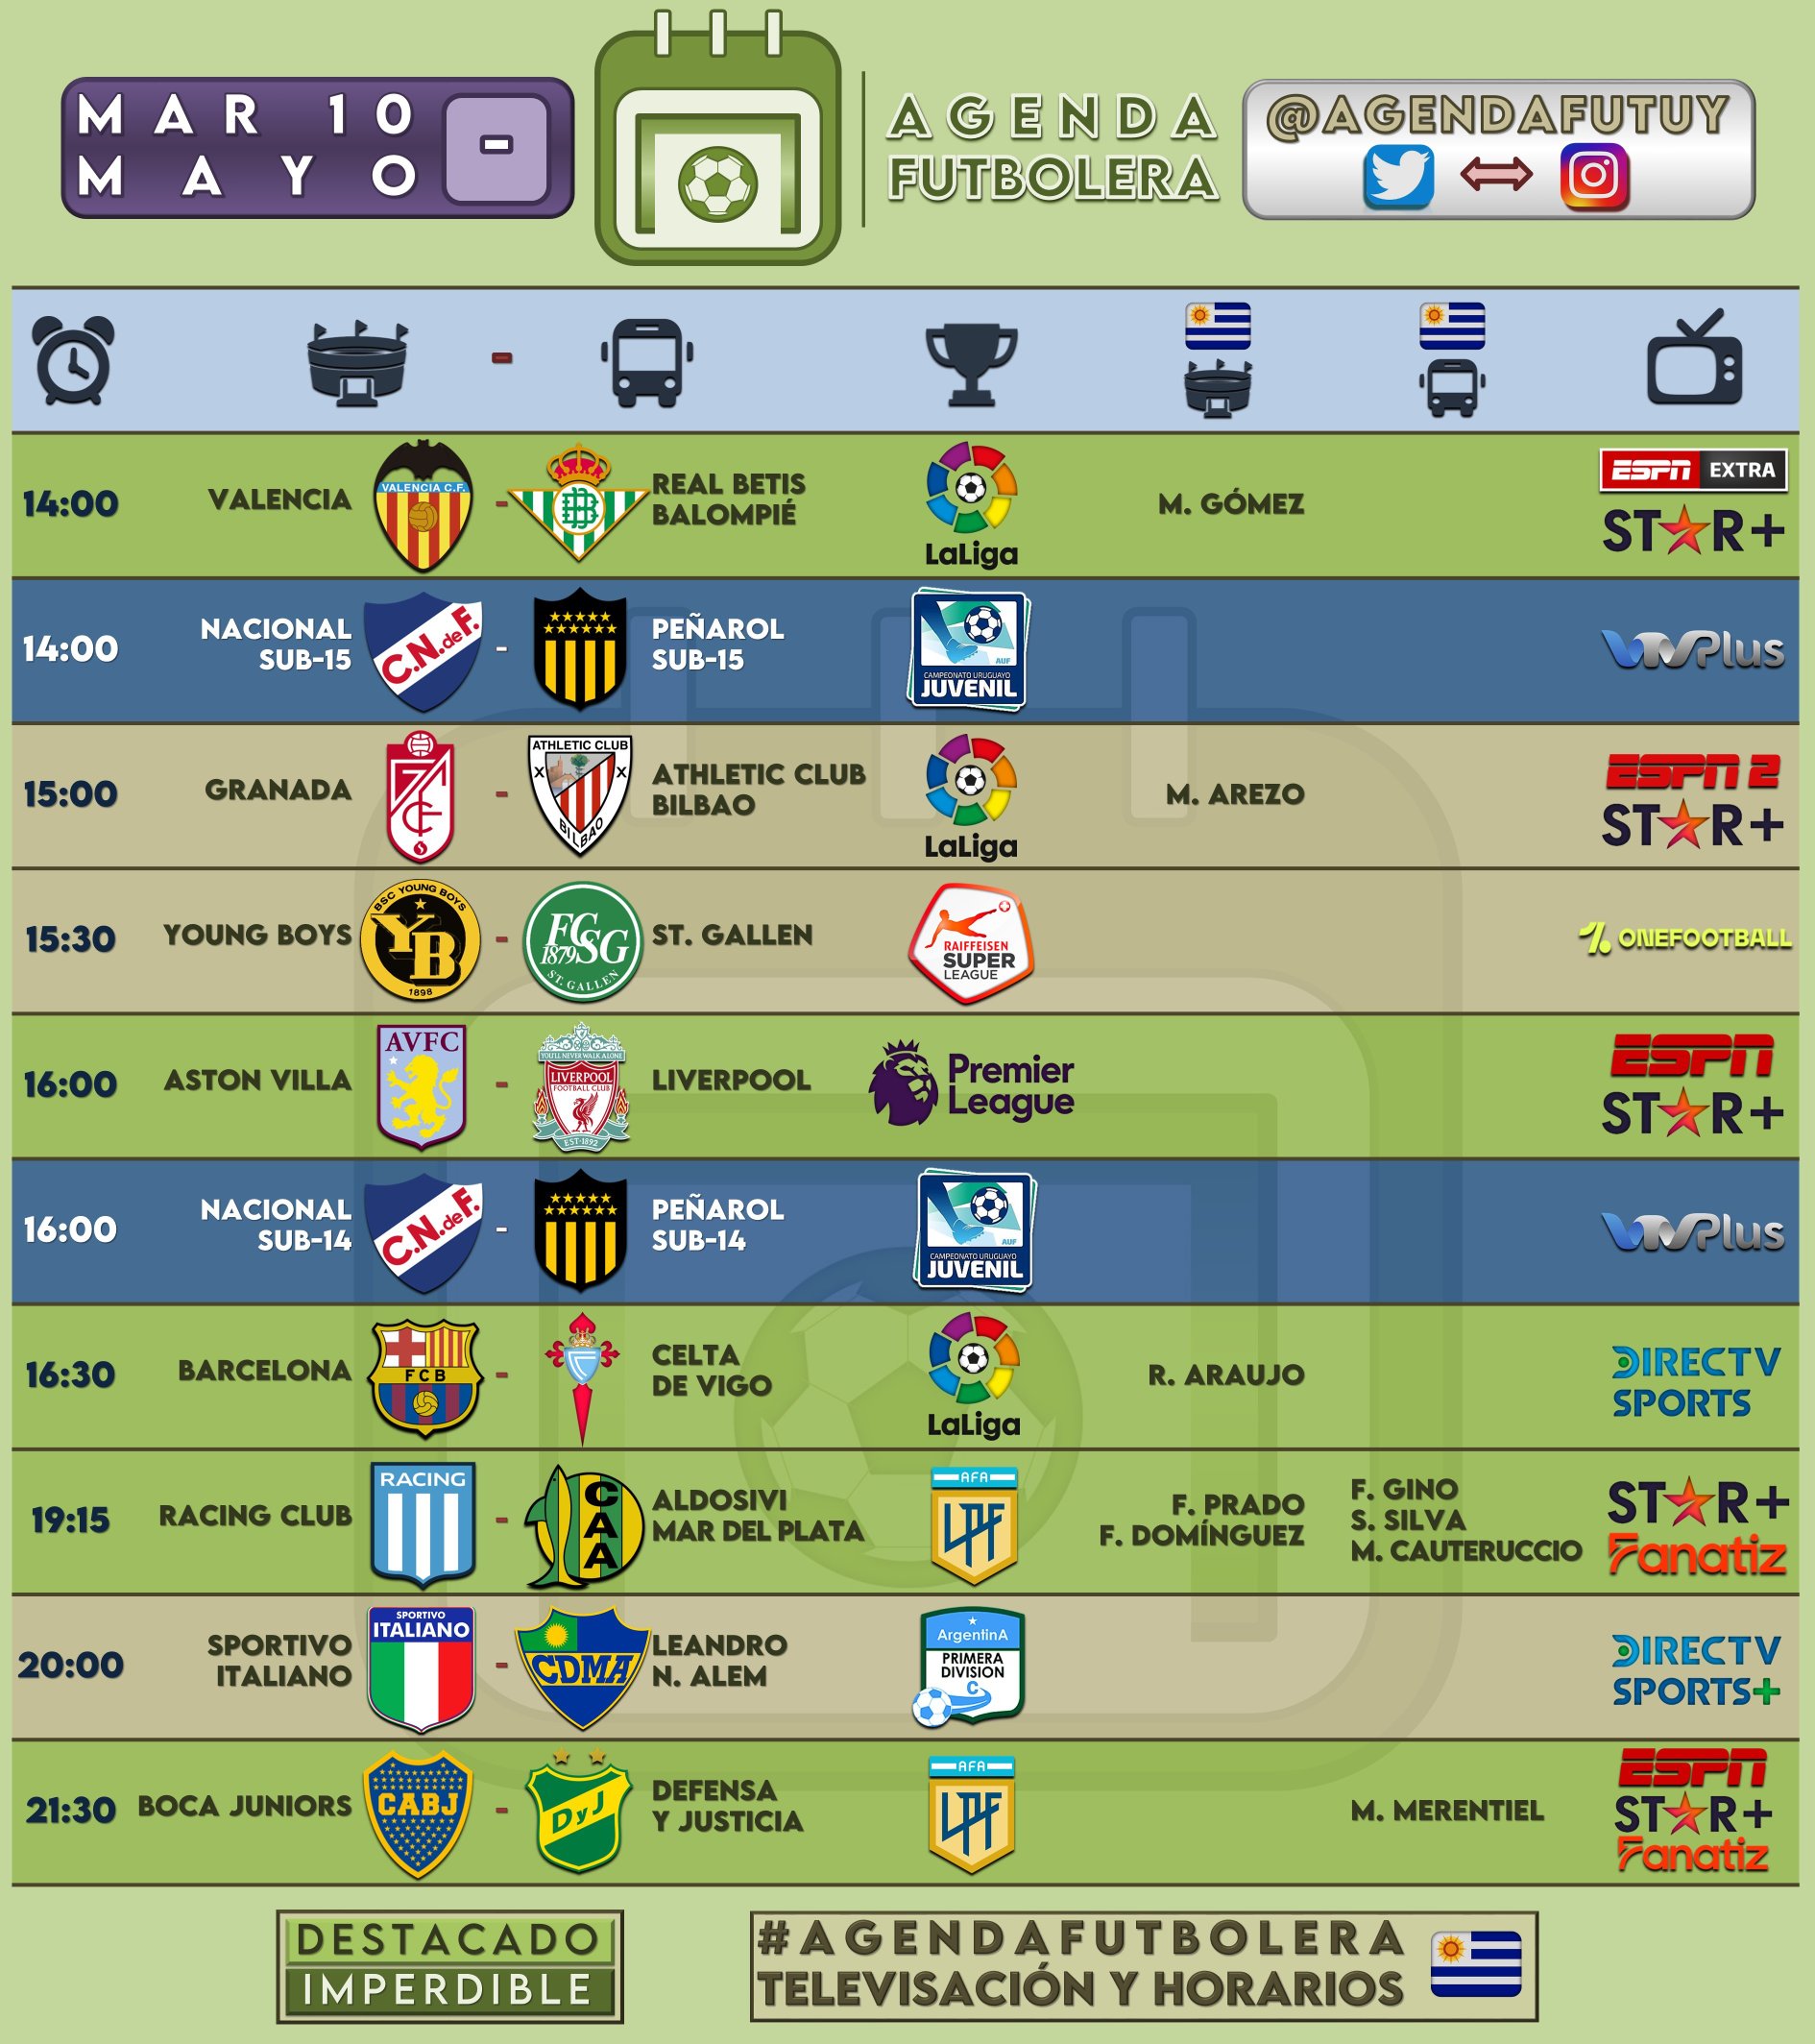 AgendaFutbolera on Twitter: "#AgendaFutbolera 🗓️⚽ @AgendaFutUY 👥🔗 📆 MARTES 10/05 🇺🇾 Clásicos @JuvenilesAUF ✓ Sub-15 ✓ Sub-14 ➡️ La Liga ➡️ Premier League 🏴󠁧󠁢󠁥󠁮󠁧󠁿 Liga Argentina 🇦🇷 ➡️ Liga Suiza ...